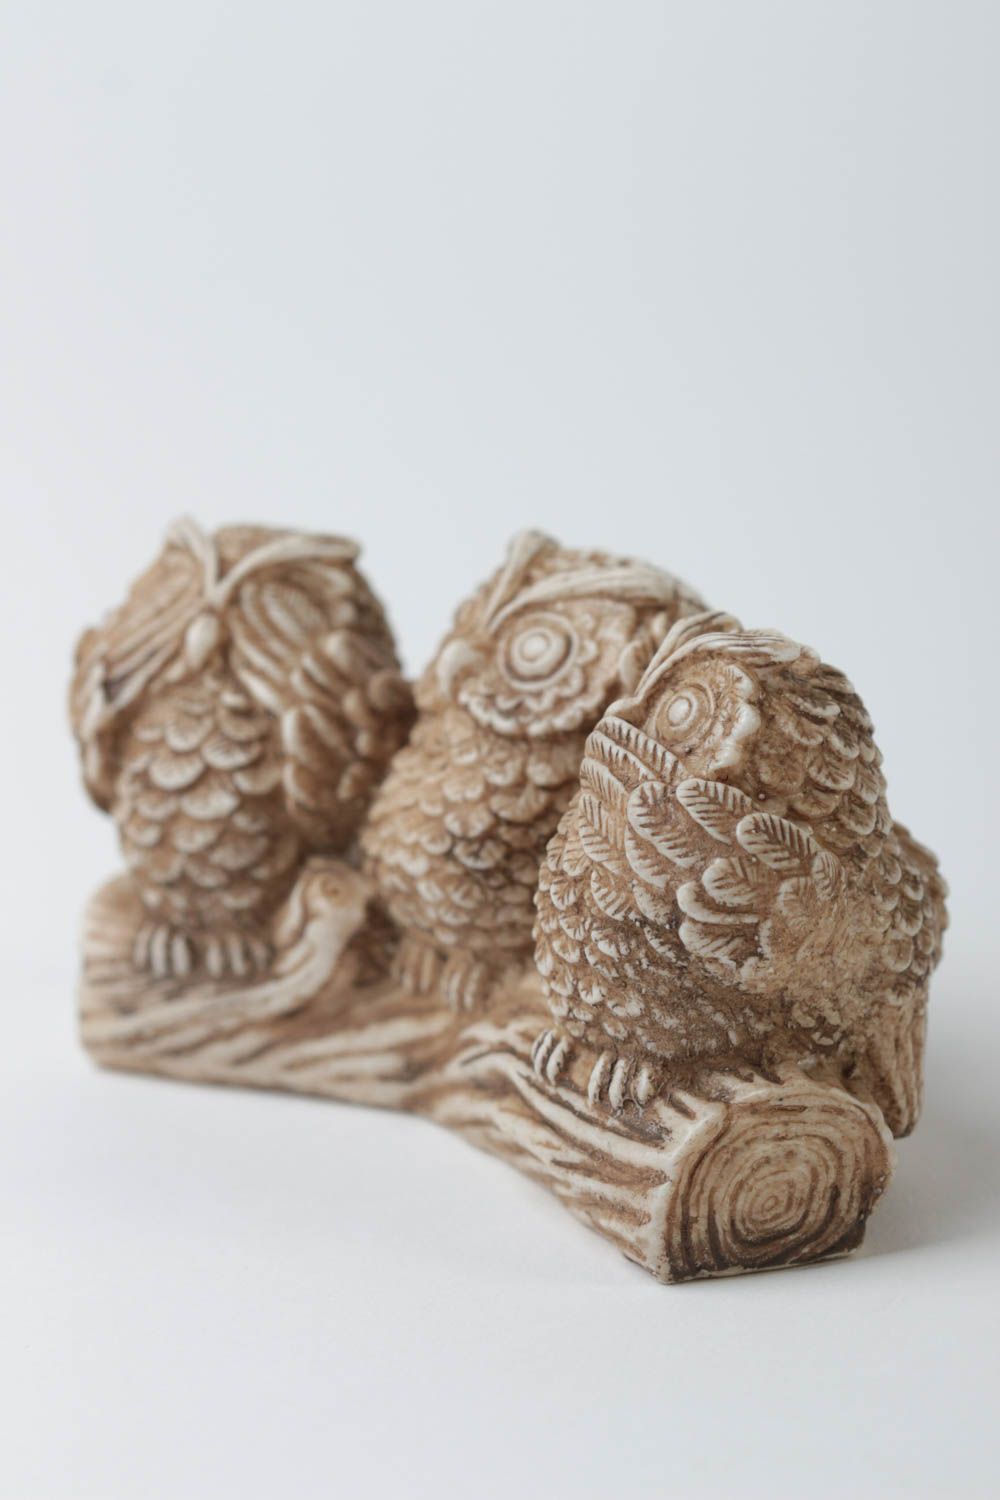 Owl statue handmade gift ideas home decor polymer resin miniature figurines photo 3